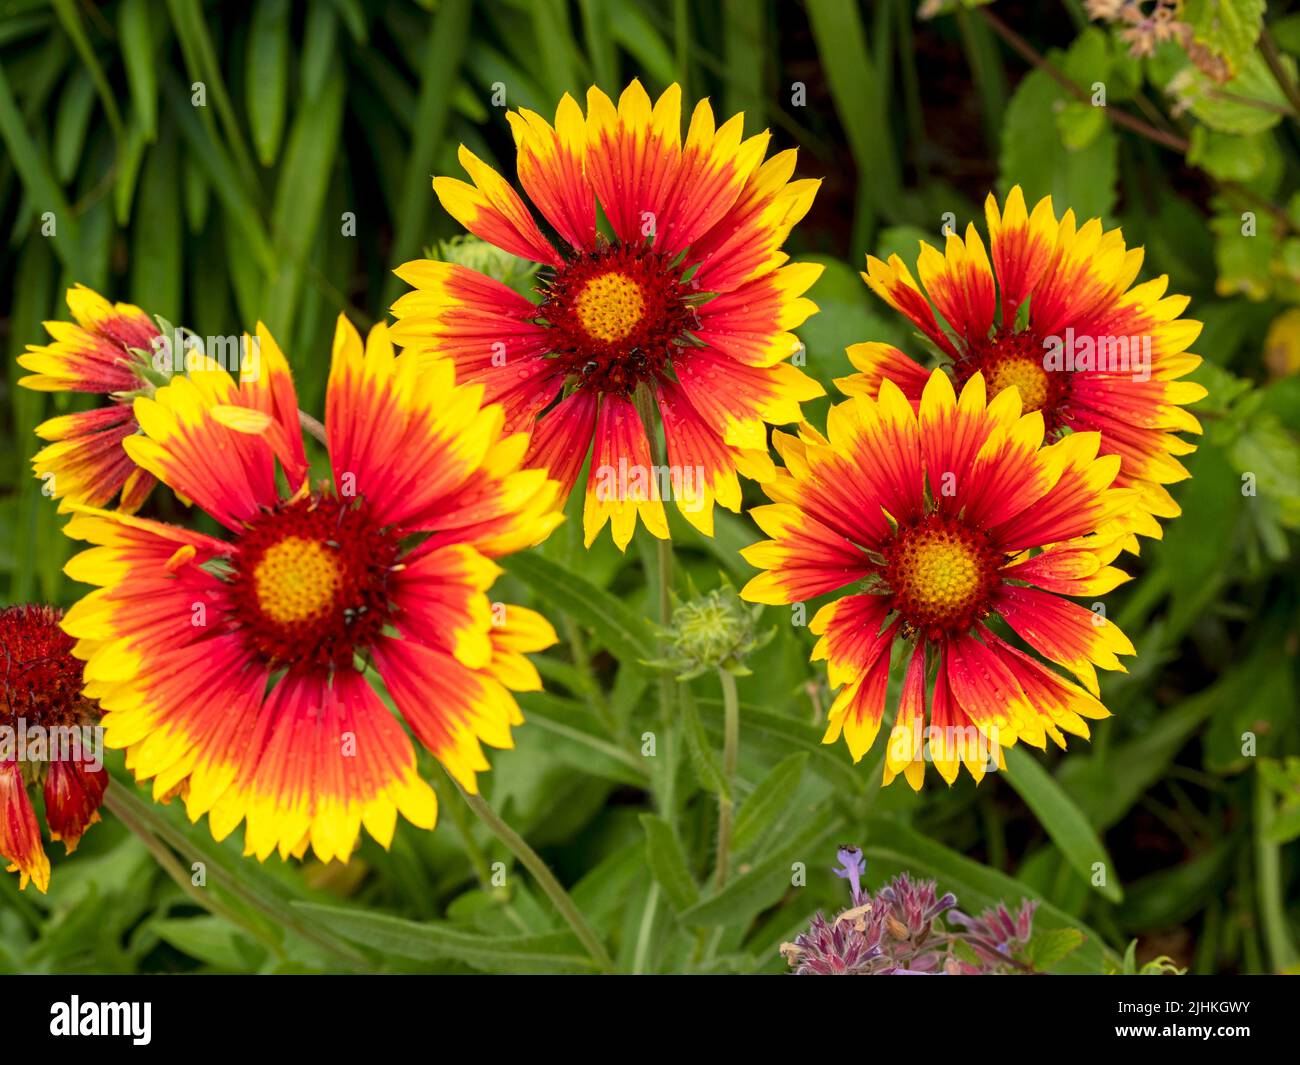 Bright and pretty Gaillardia blanket flowers in a garden Stock Photo